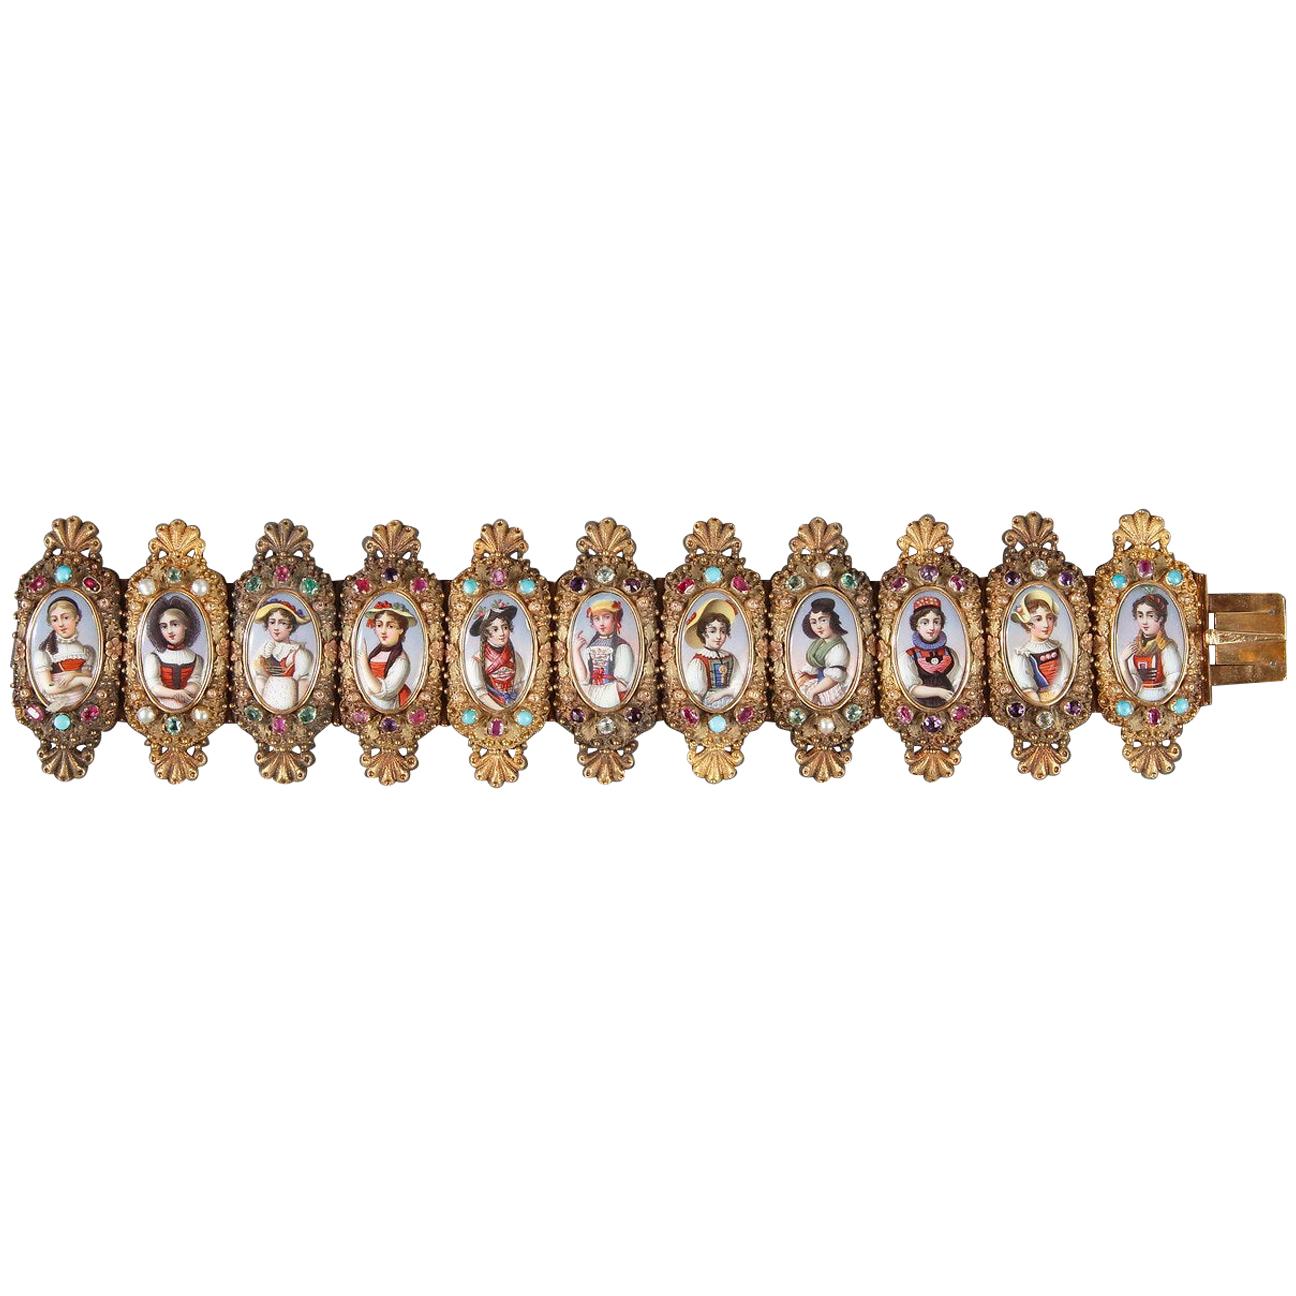 Bracelet in Gold, Enamel, and Gemstones, Mid-19th Century